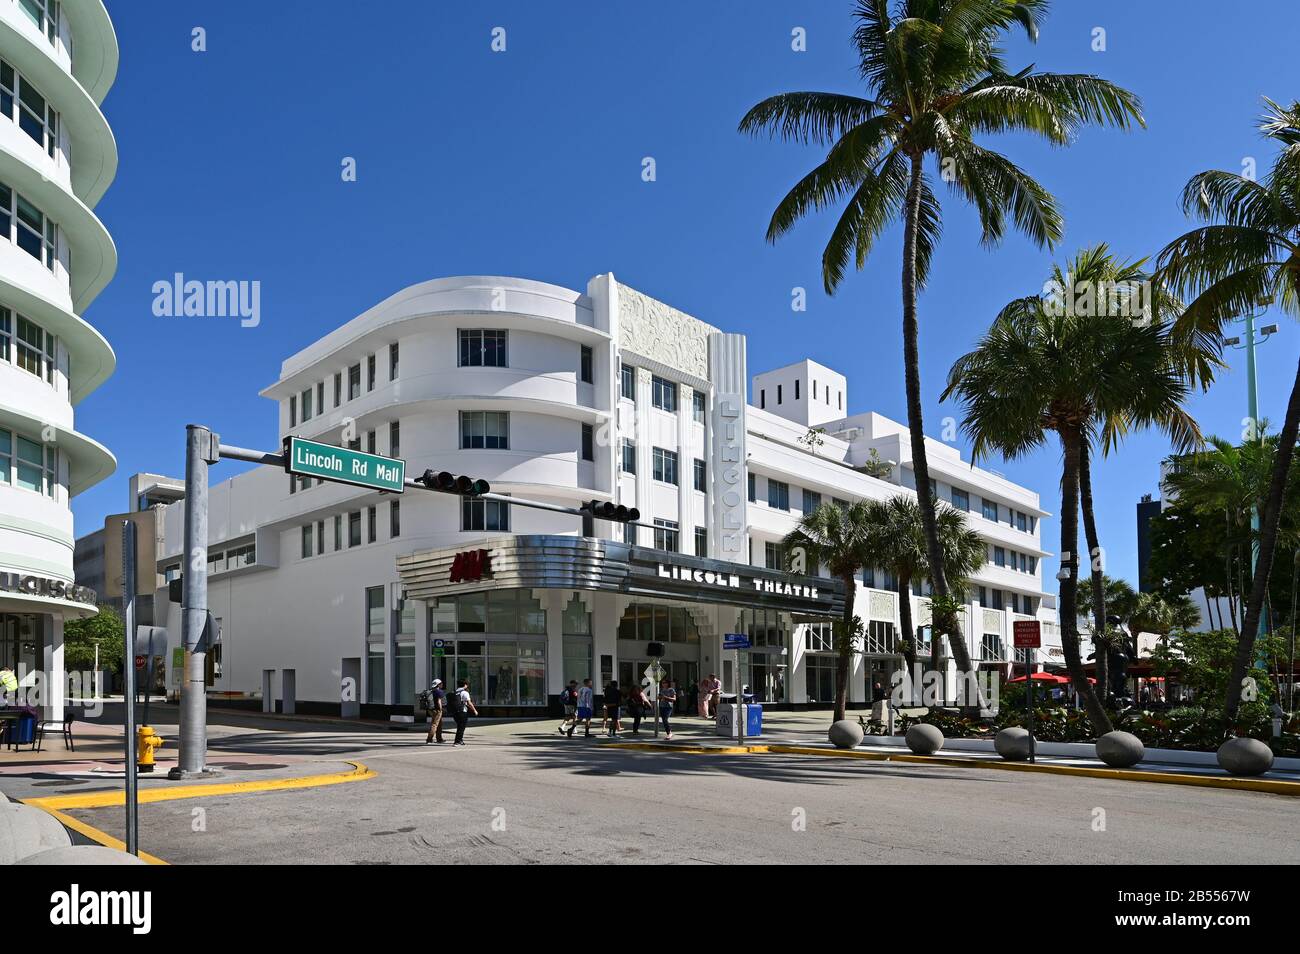 Miami Beach, Florida - 29. Februar 2020 - Art Deco Lincoln Theatre in der Lincoln Road Mall am Morgen Licht auf klaren wolkenlosen Tag. Stockfoto